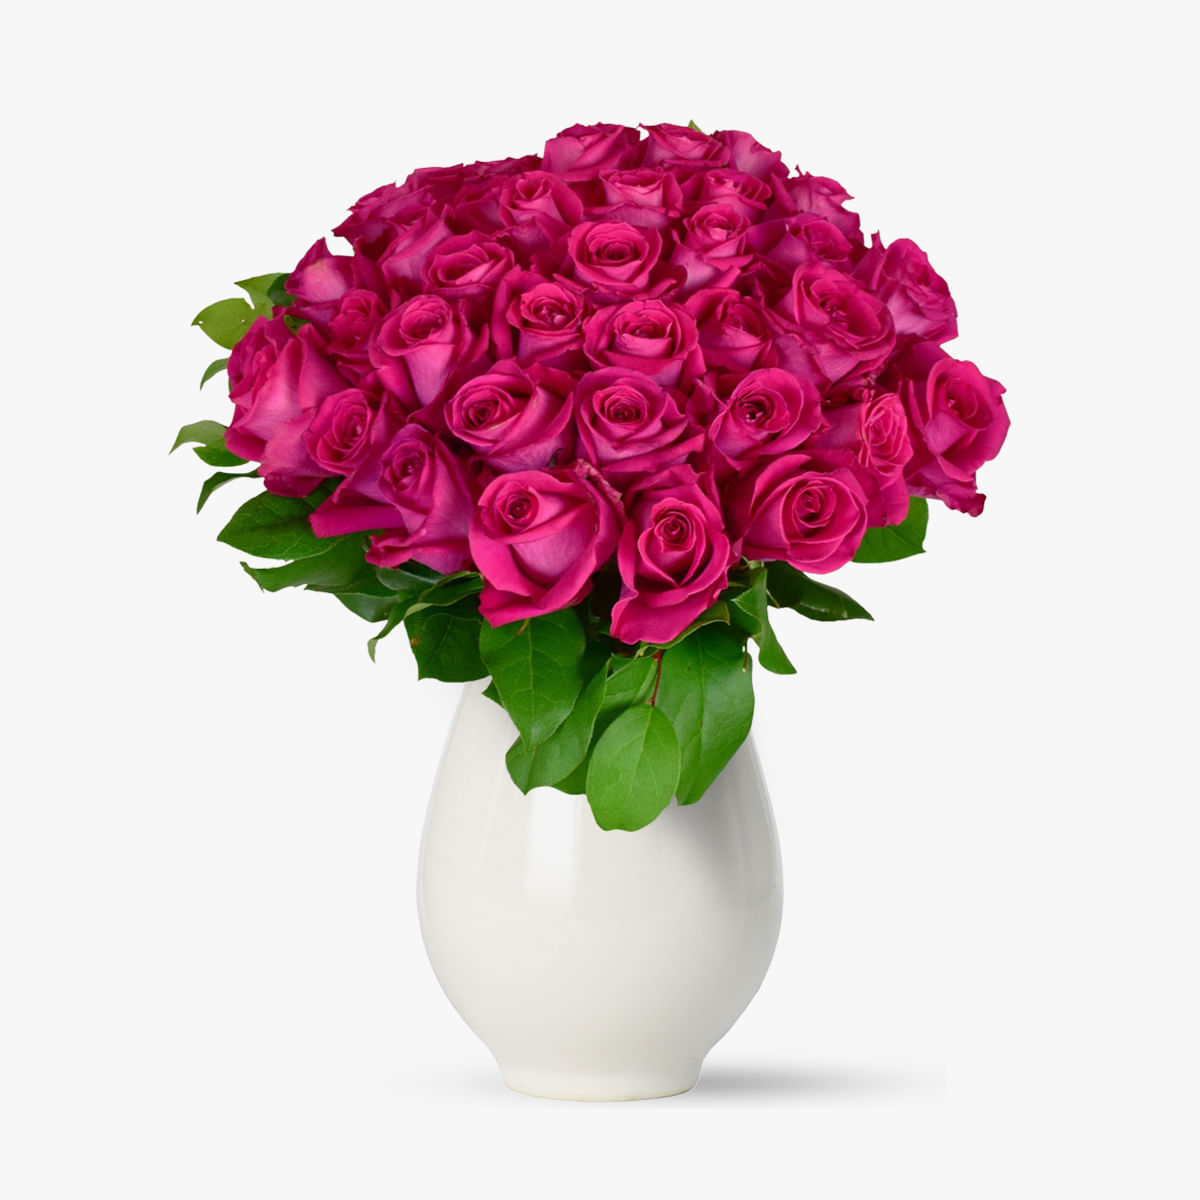 Buchet de 29 trandafiri roz – Standard Buchet imagine 2022